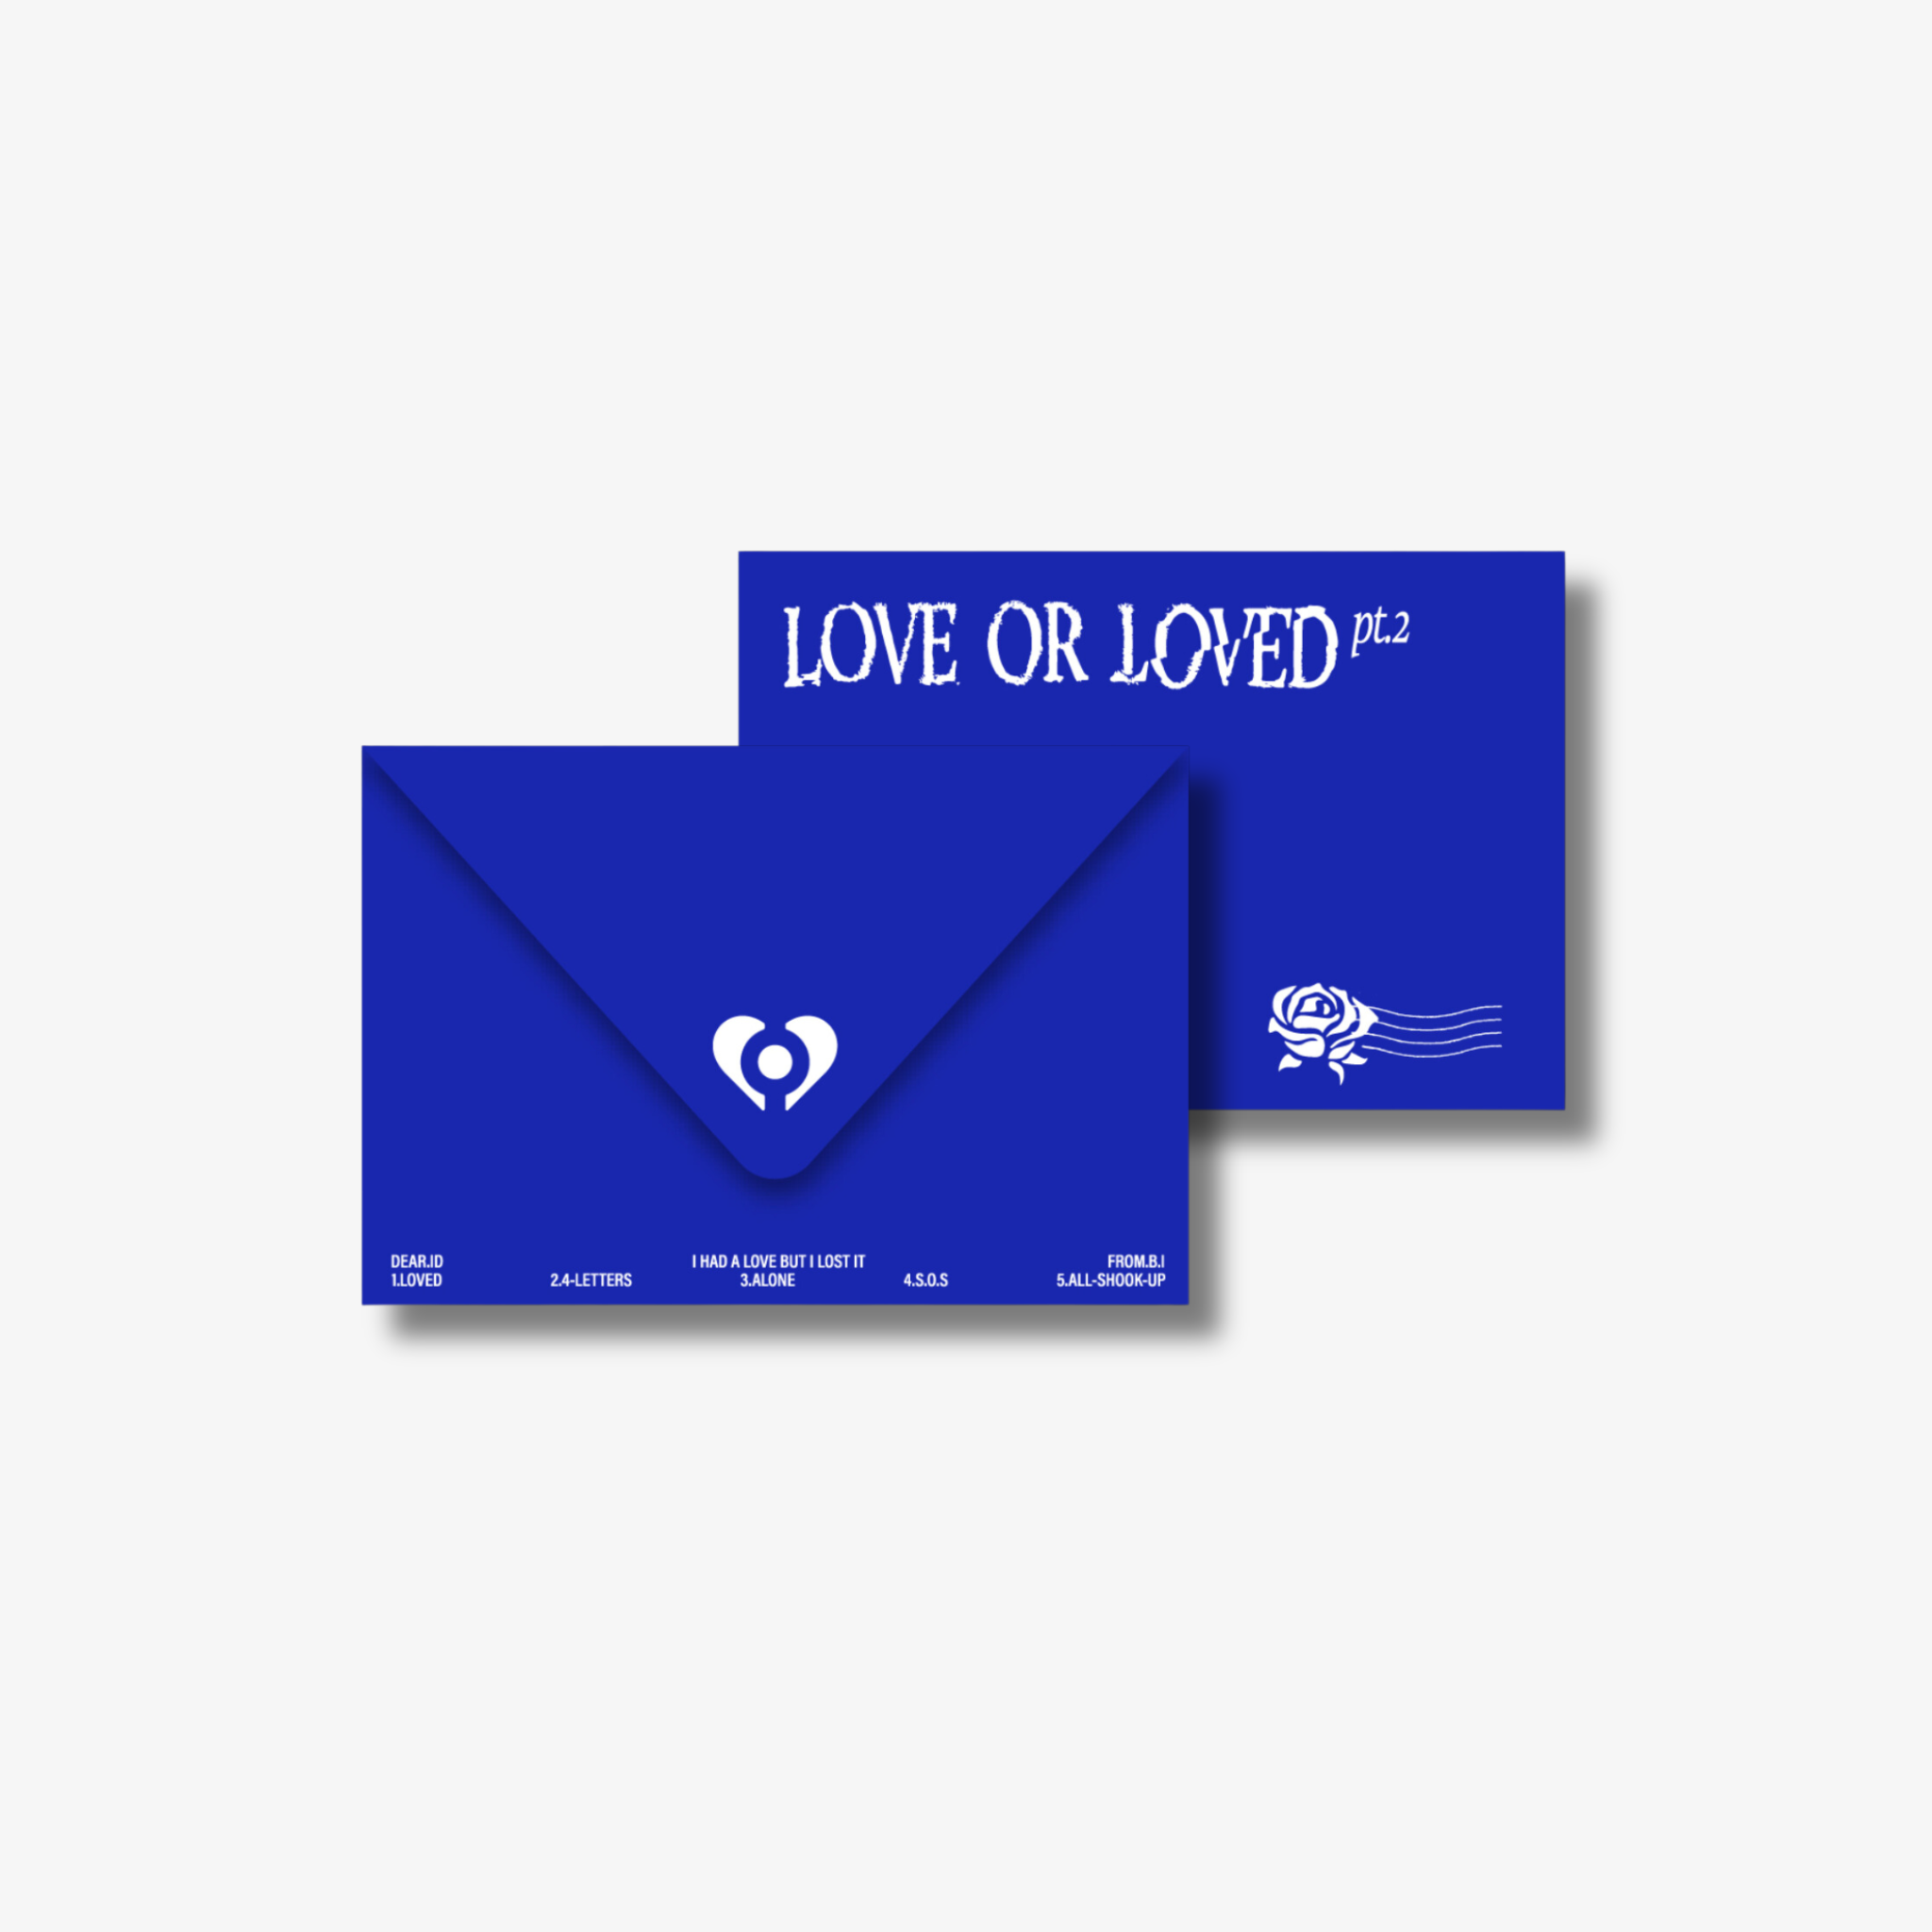 B.I 3rd EP Album "Love or Loved Part.2" (Asia Letter Ver.)